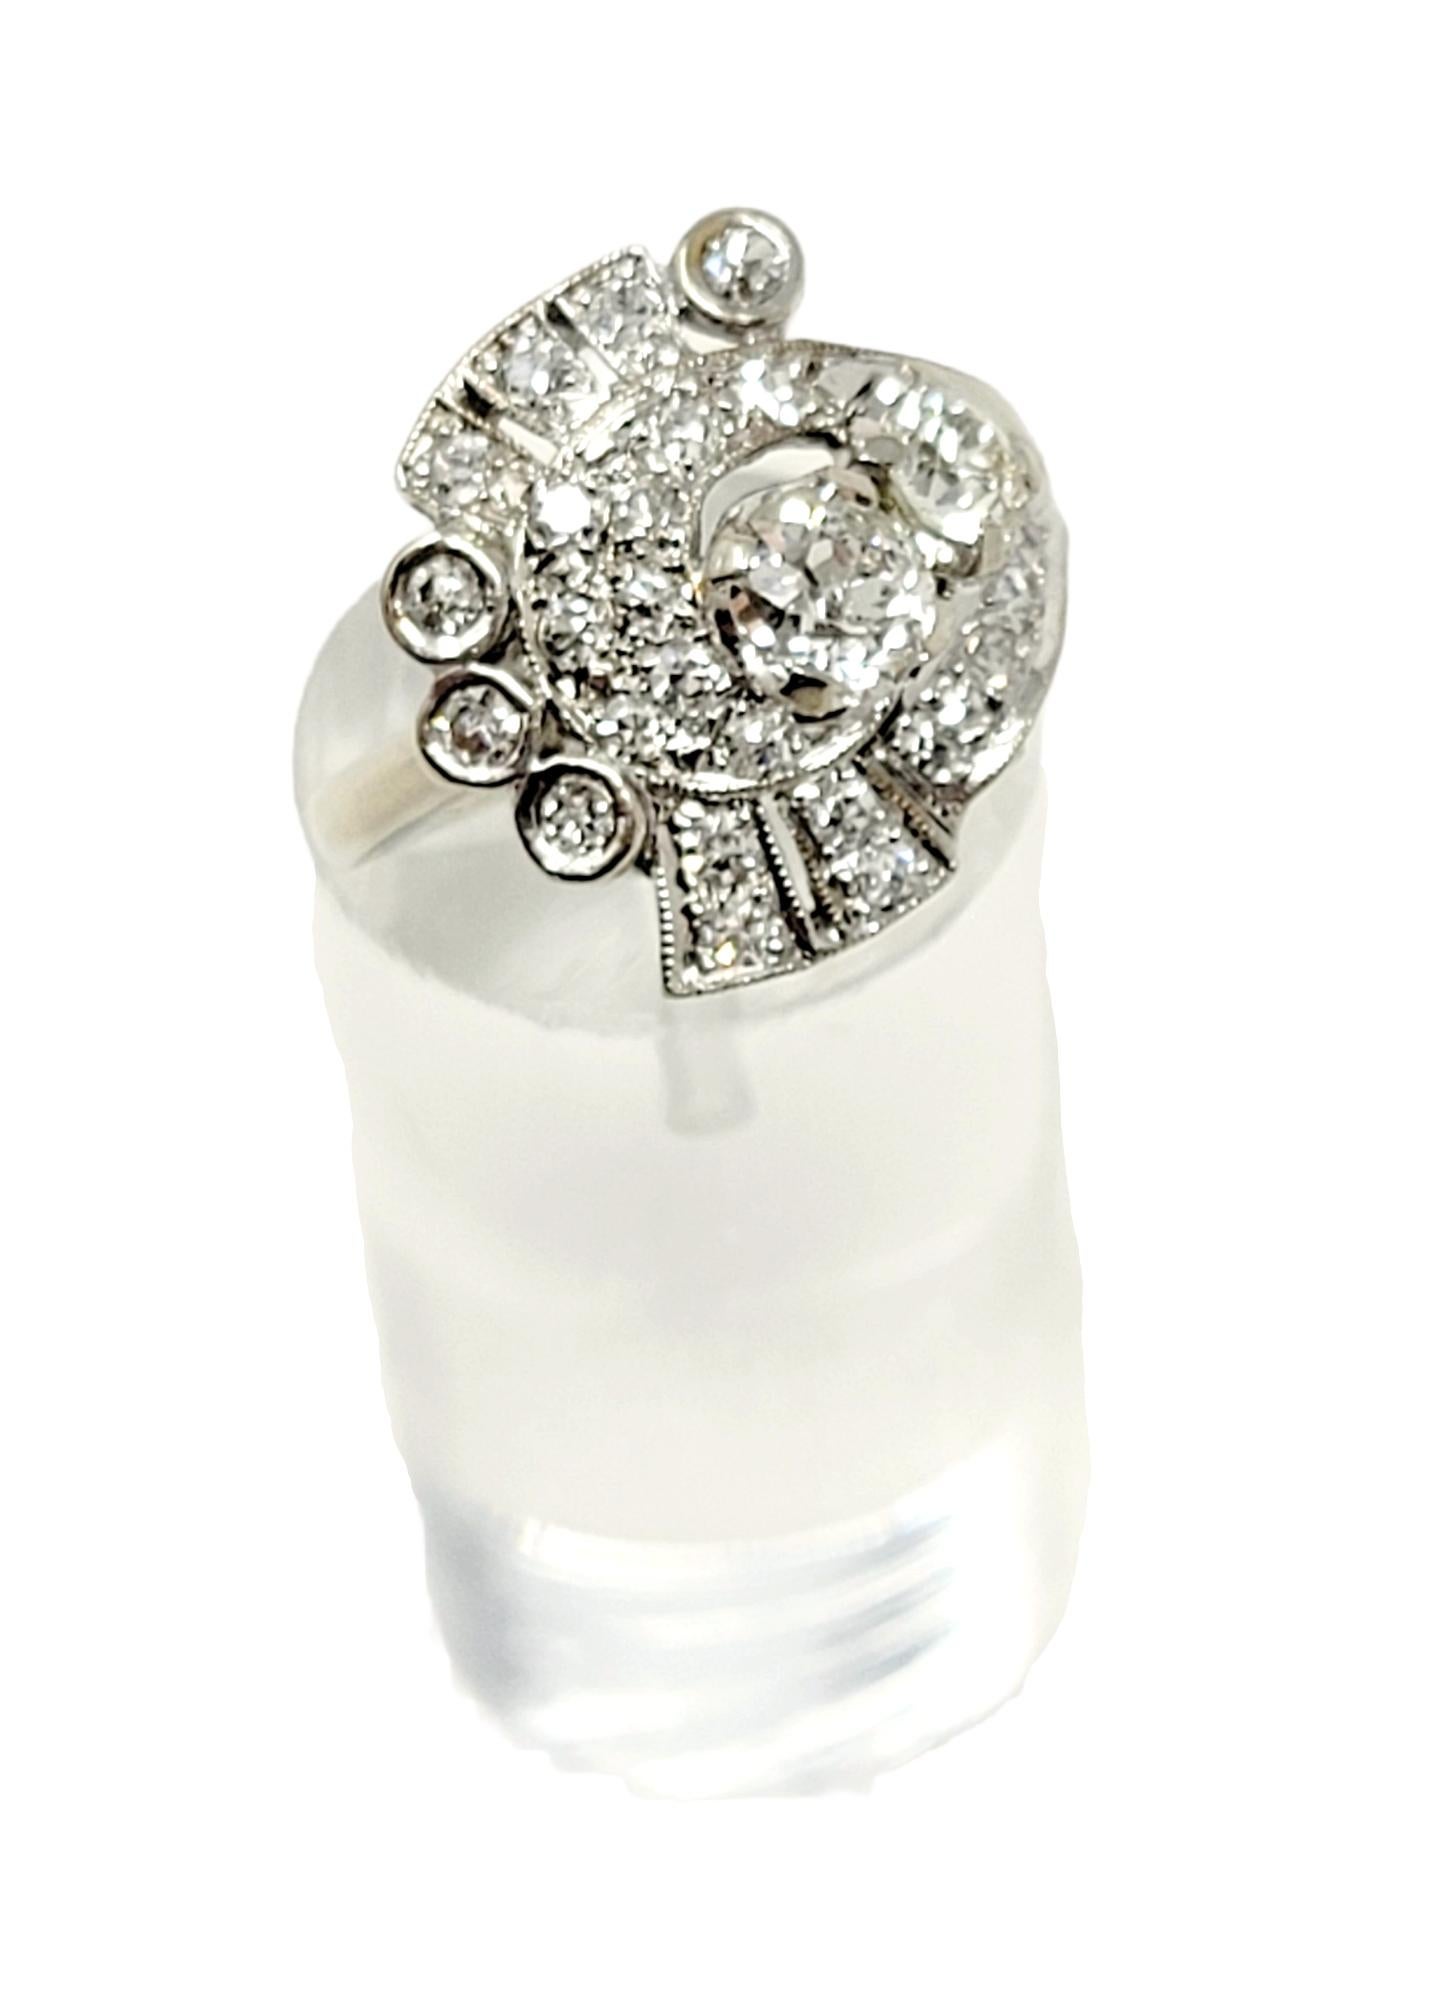 1.05 Carats Total Vintage Old Mine Cut Diamond Cluster Ring 14 Karat White Gold For Sale 2